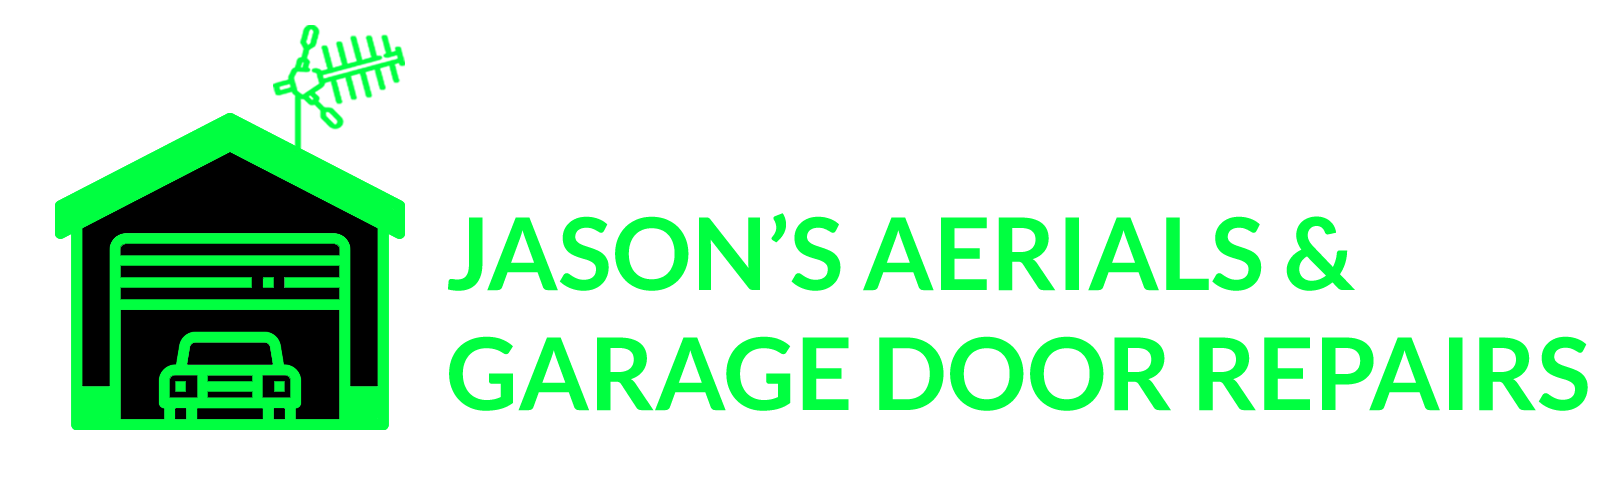 Jason aerials & garage doors logo black